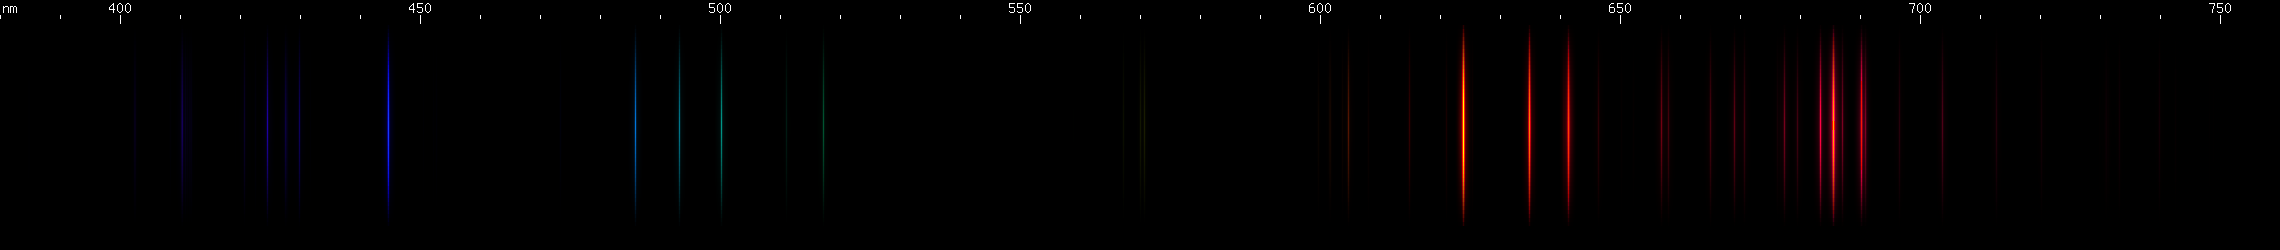 Spectral Lines of Fluorine